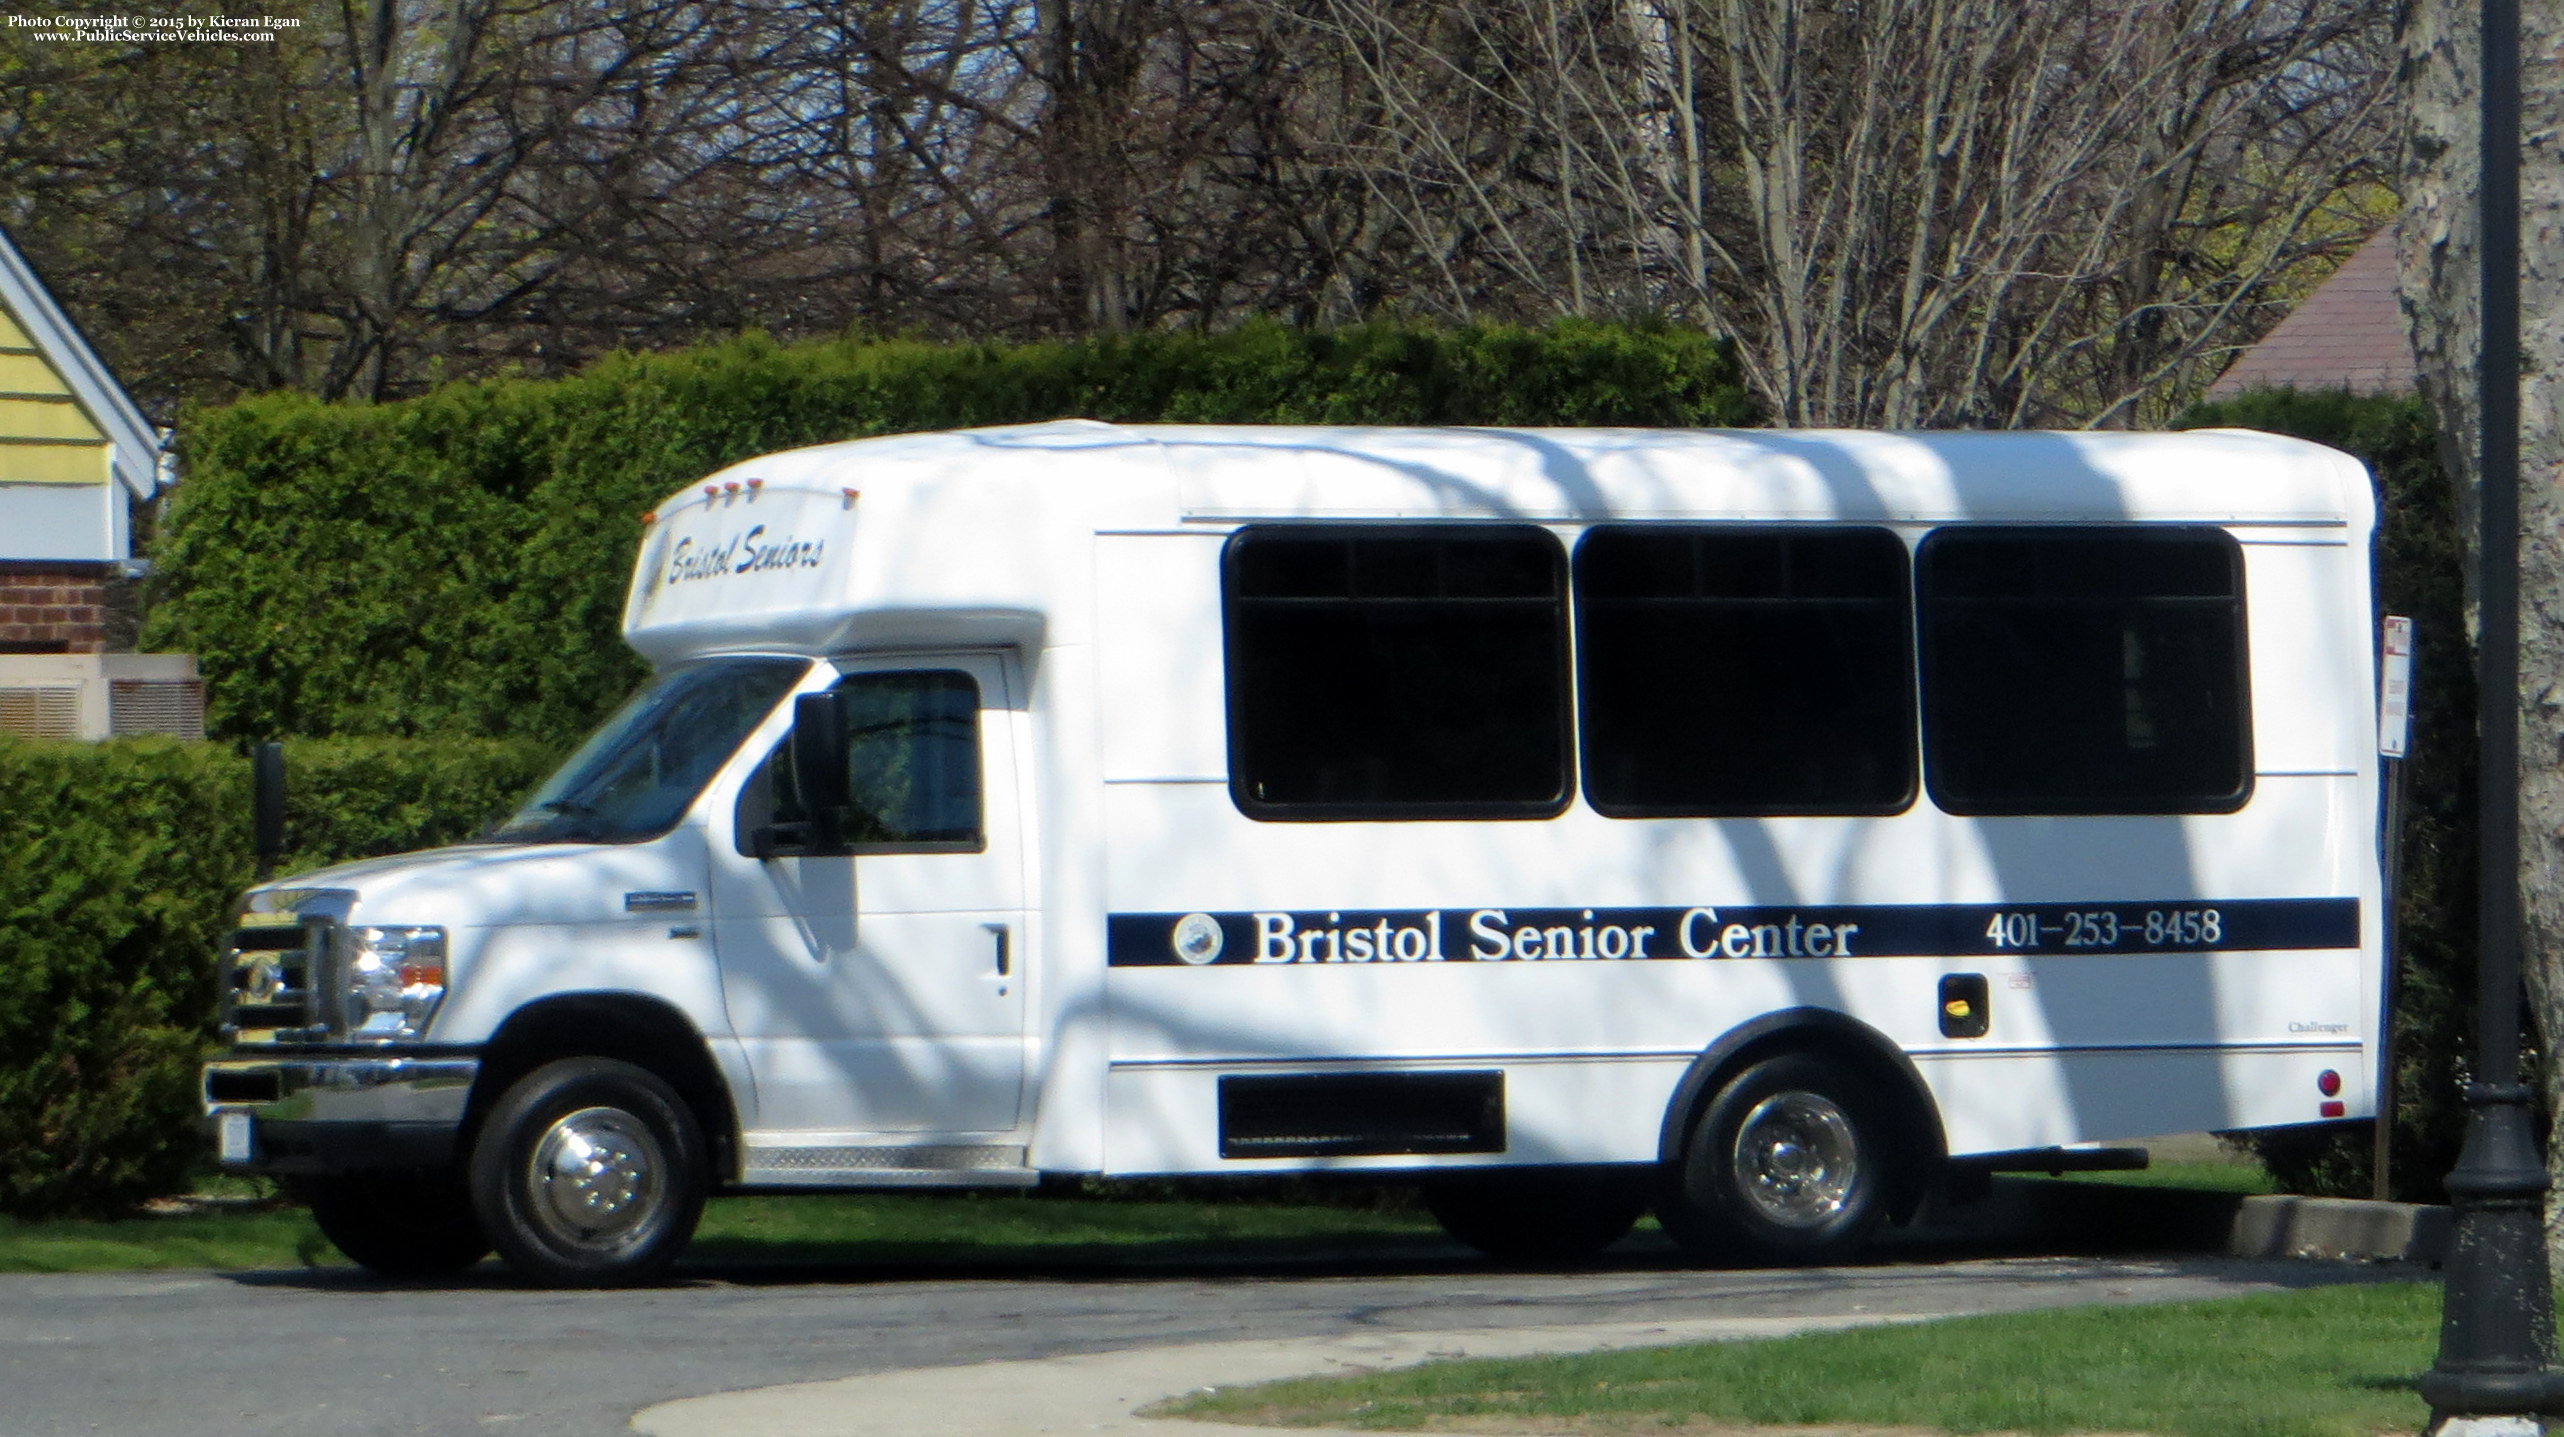 A photo  of Bristol Senior Center
            Senior Center Bus, a 2010-2015 Ford E-Series Bus             taken by Kieran Egan